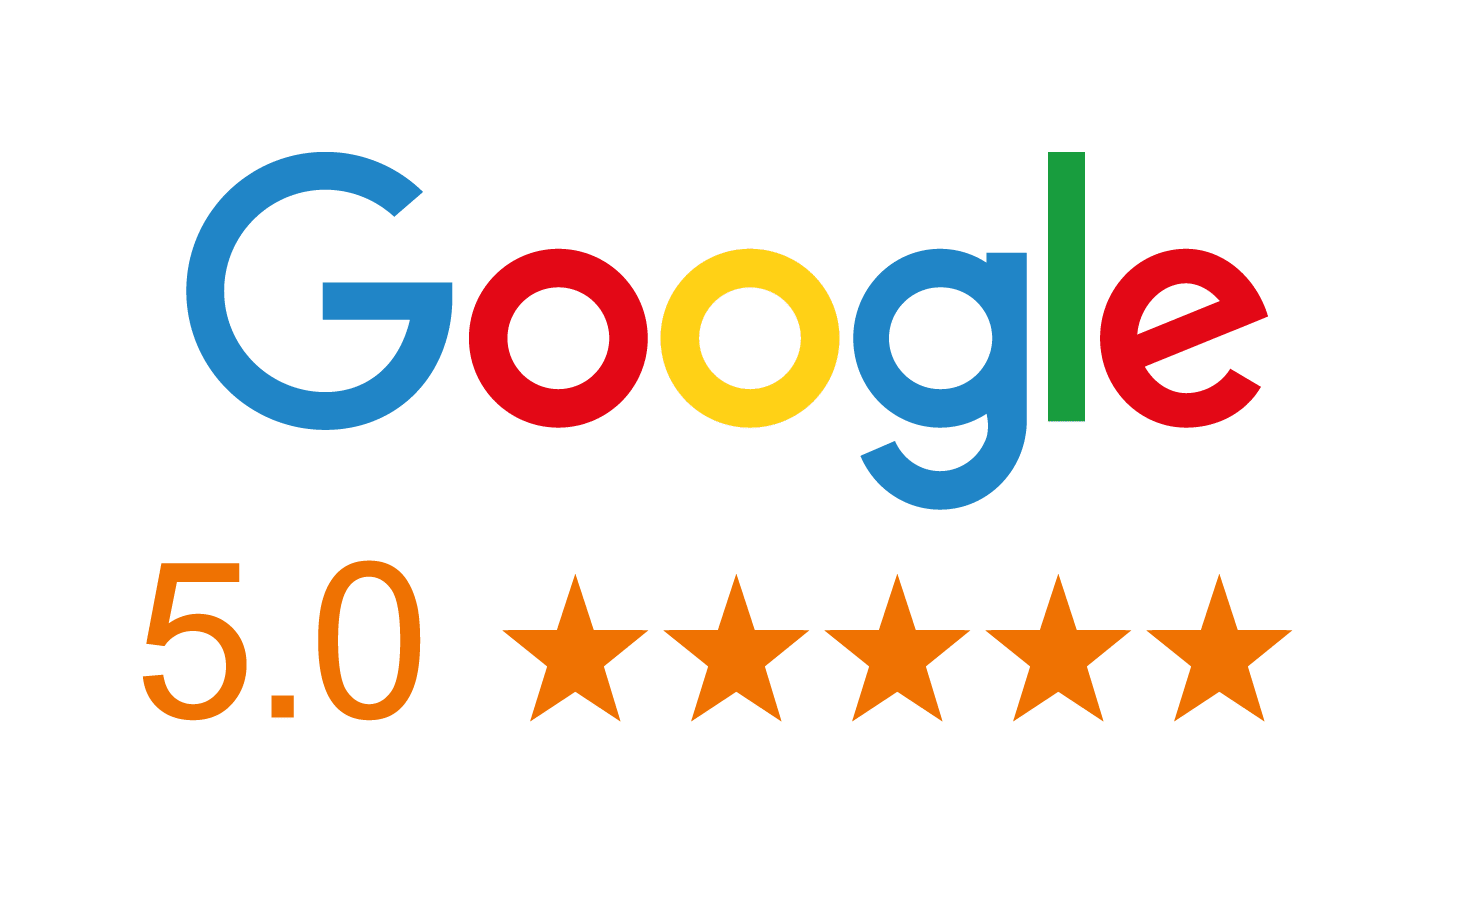 D.V.S - Dynamic Vehicle Services Google Reviews